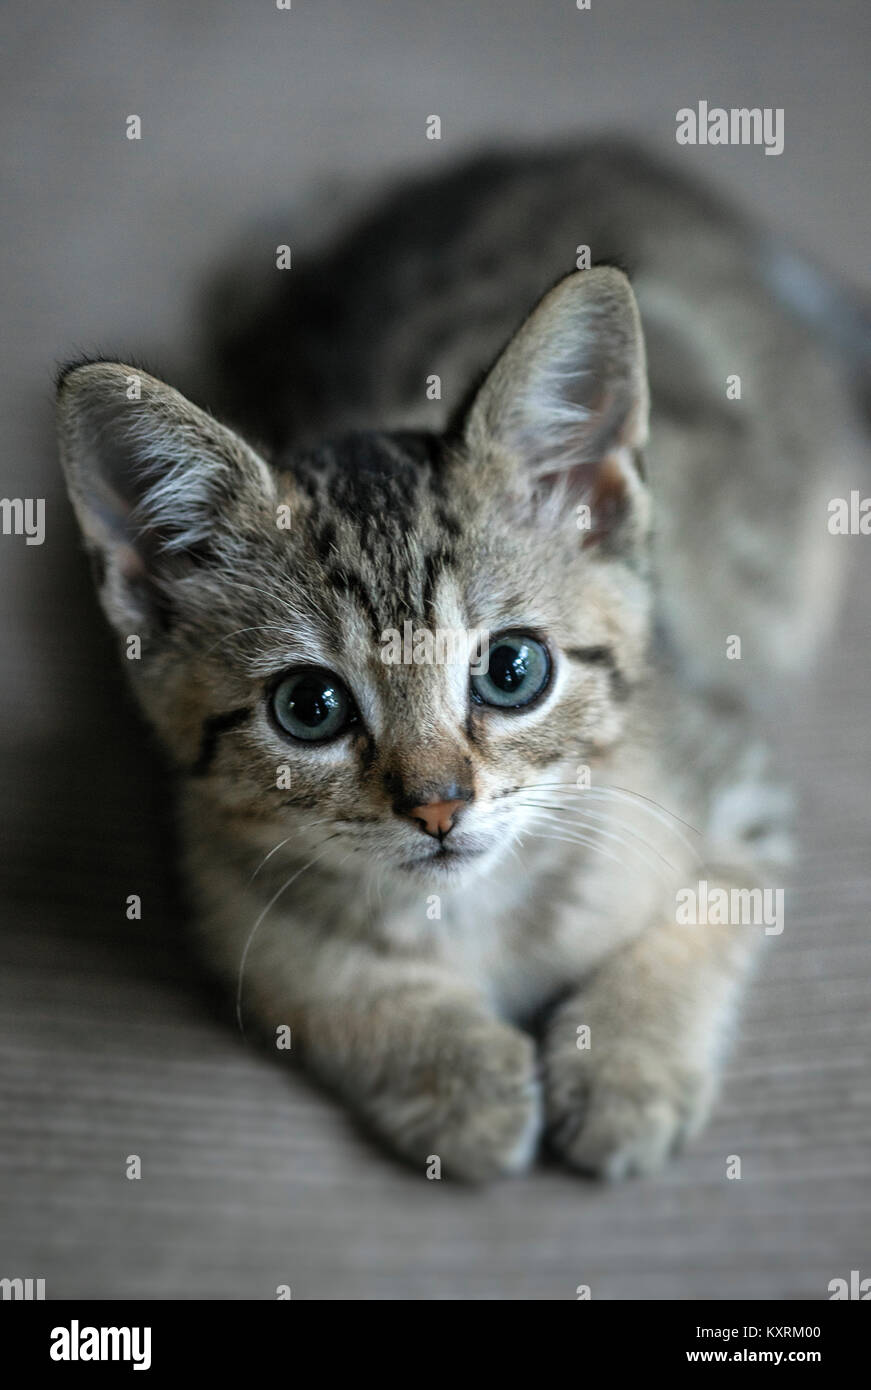 Adorable tabby kitten portrait. Stock Photo